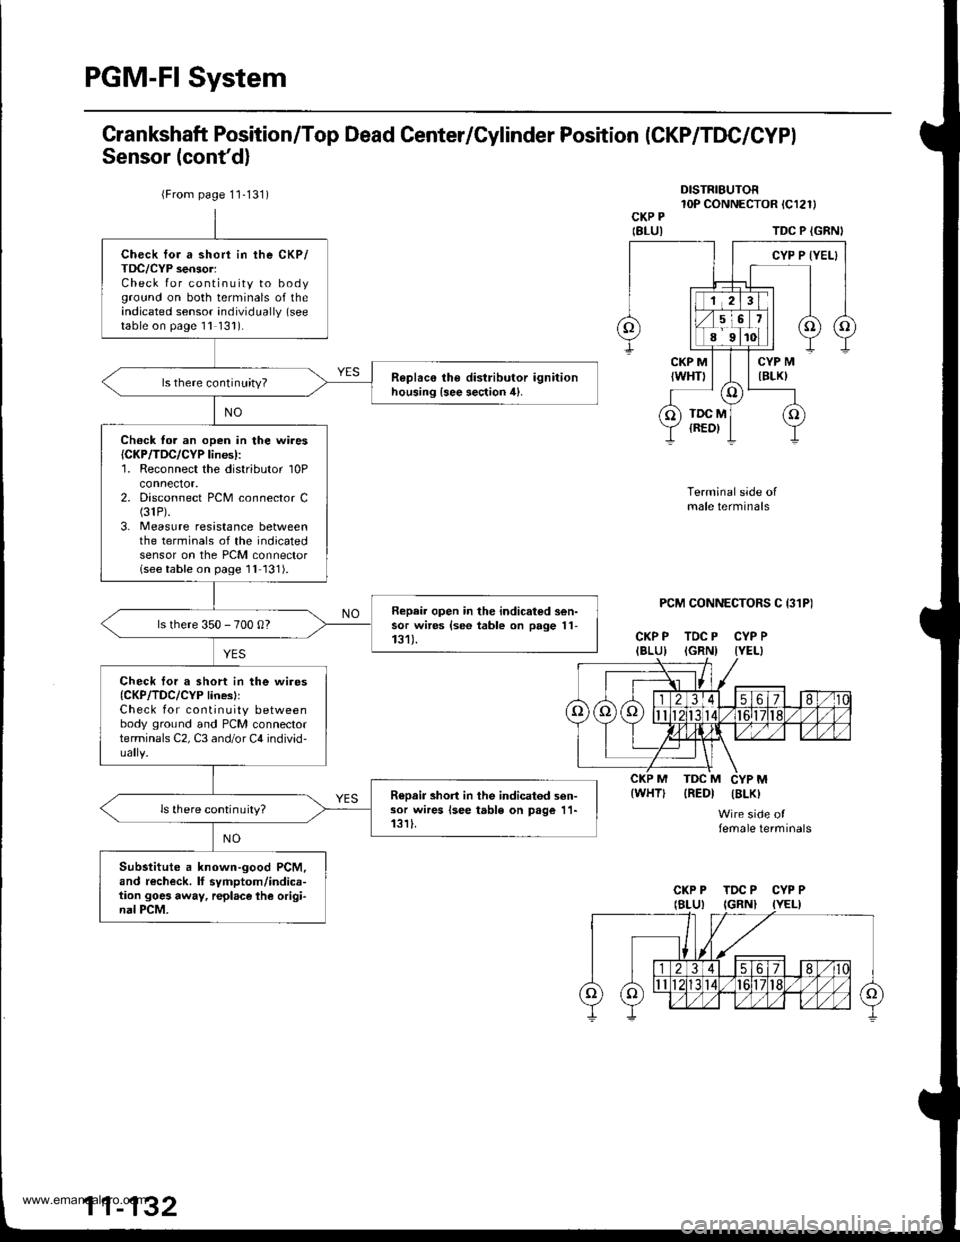 HONDA CR-V 1999 RD1-RD3 / 1.G Workshop Manual 
PGM-FI System
Grankshaft Position/Top Dead Center/Cylinder Position (CKP/TDC/CYPI
Sensor (contd)
DISTRIBUTOR10P CONNECTOR tCl2l)CKP P
IBLUITDC P {GRNI
PCM CONNECTORS C I31P)
CKP P TDC P CYP PIBLU) I